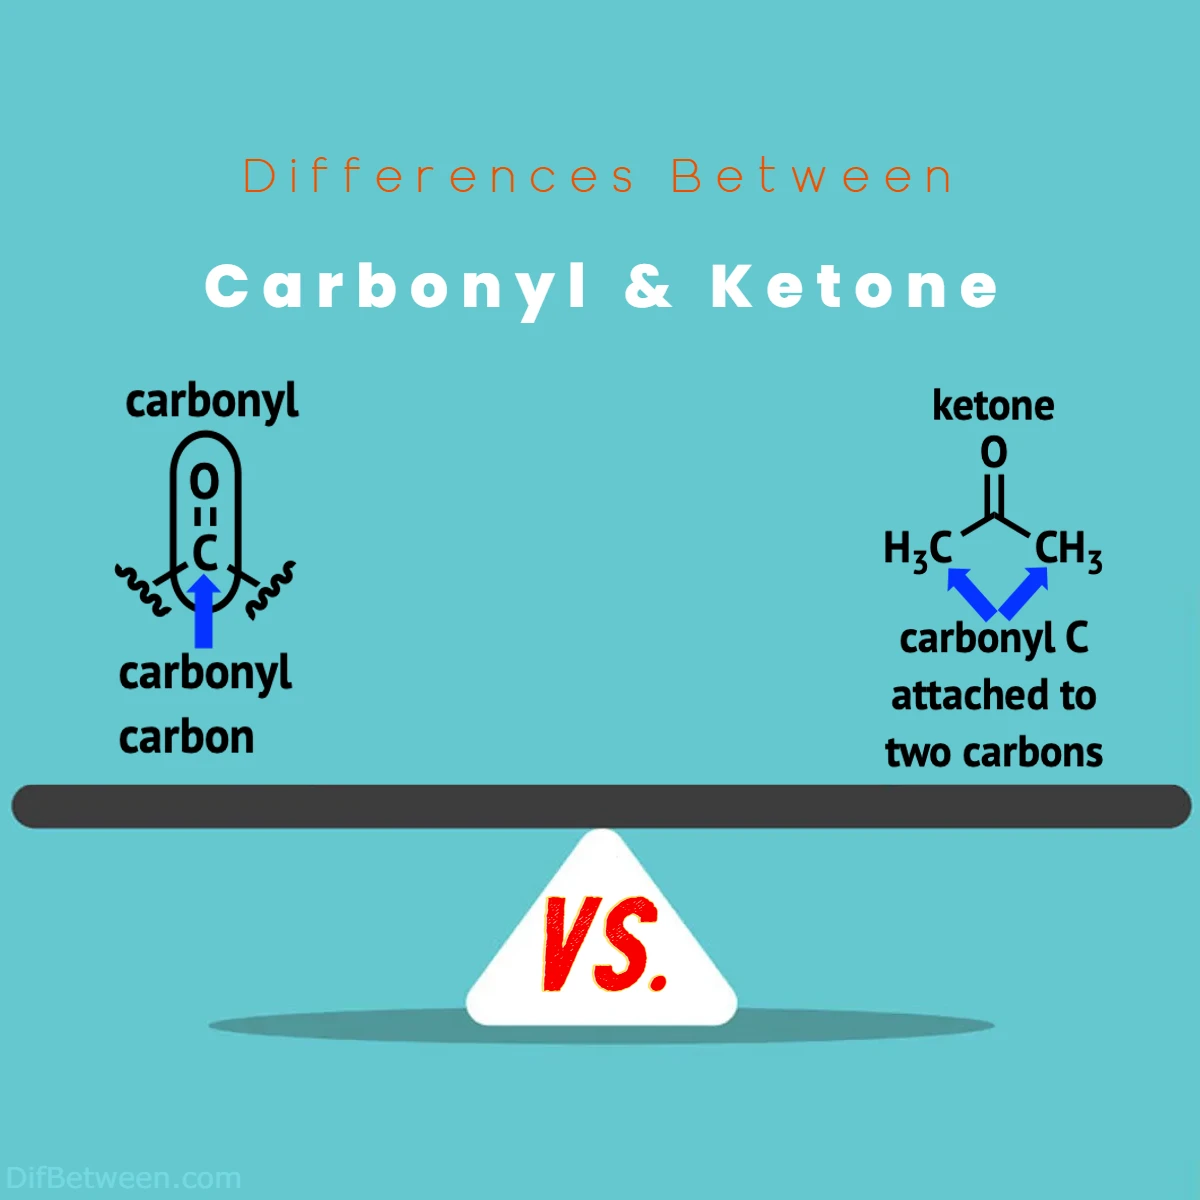 Differences Between Carbonyl vs Ketone